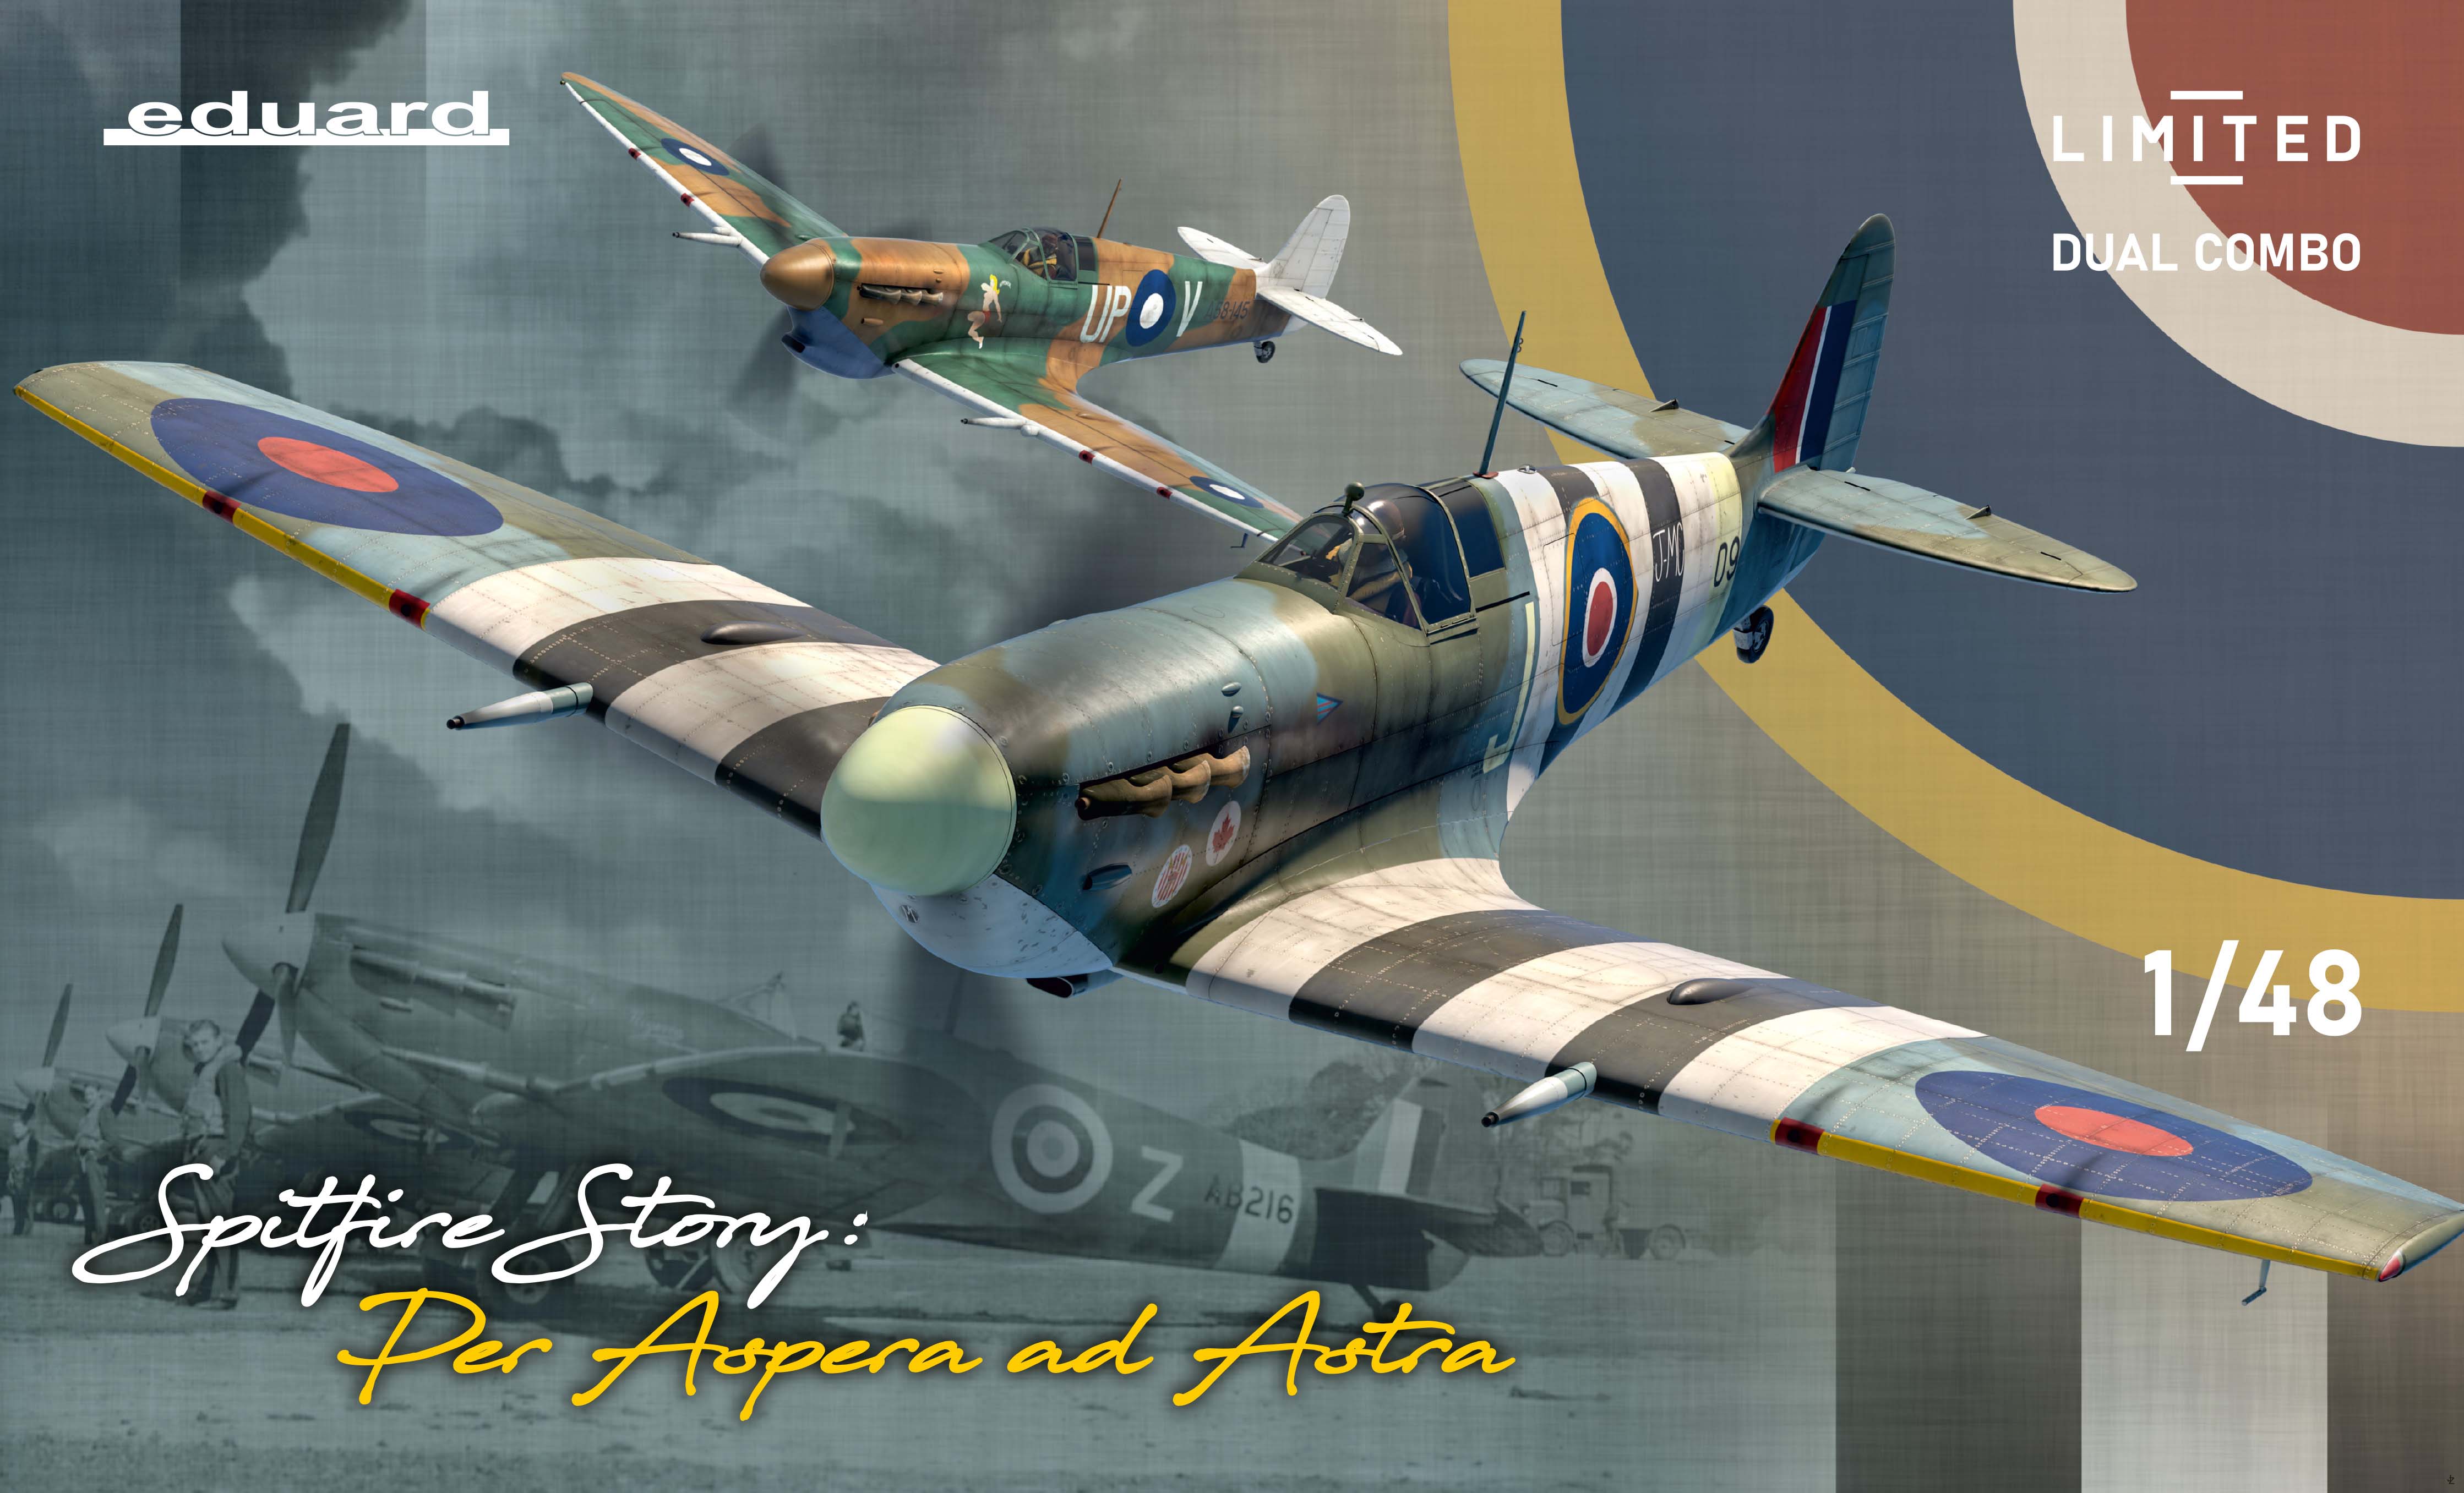 1/48 SPITFIRE STORY (Spitfire Mk.Vb a Vc): Per Aspera ad Astra - DUAL COMBO (Limited edition)